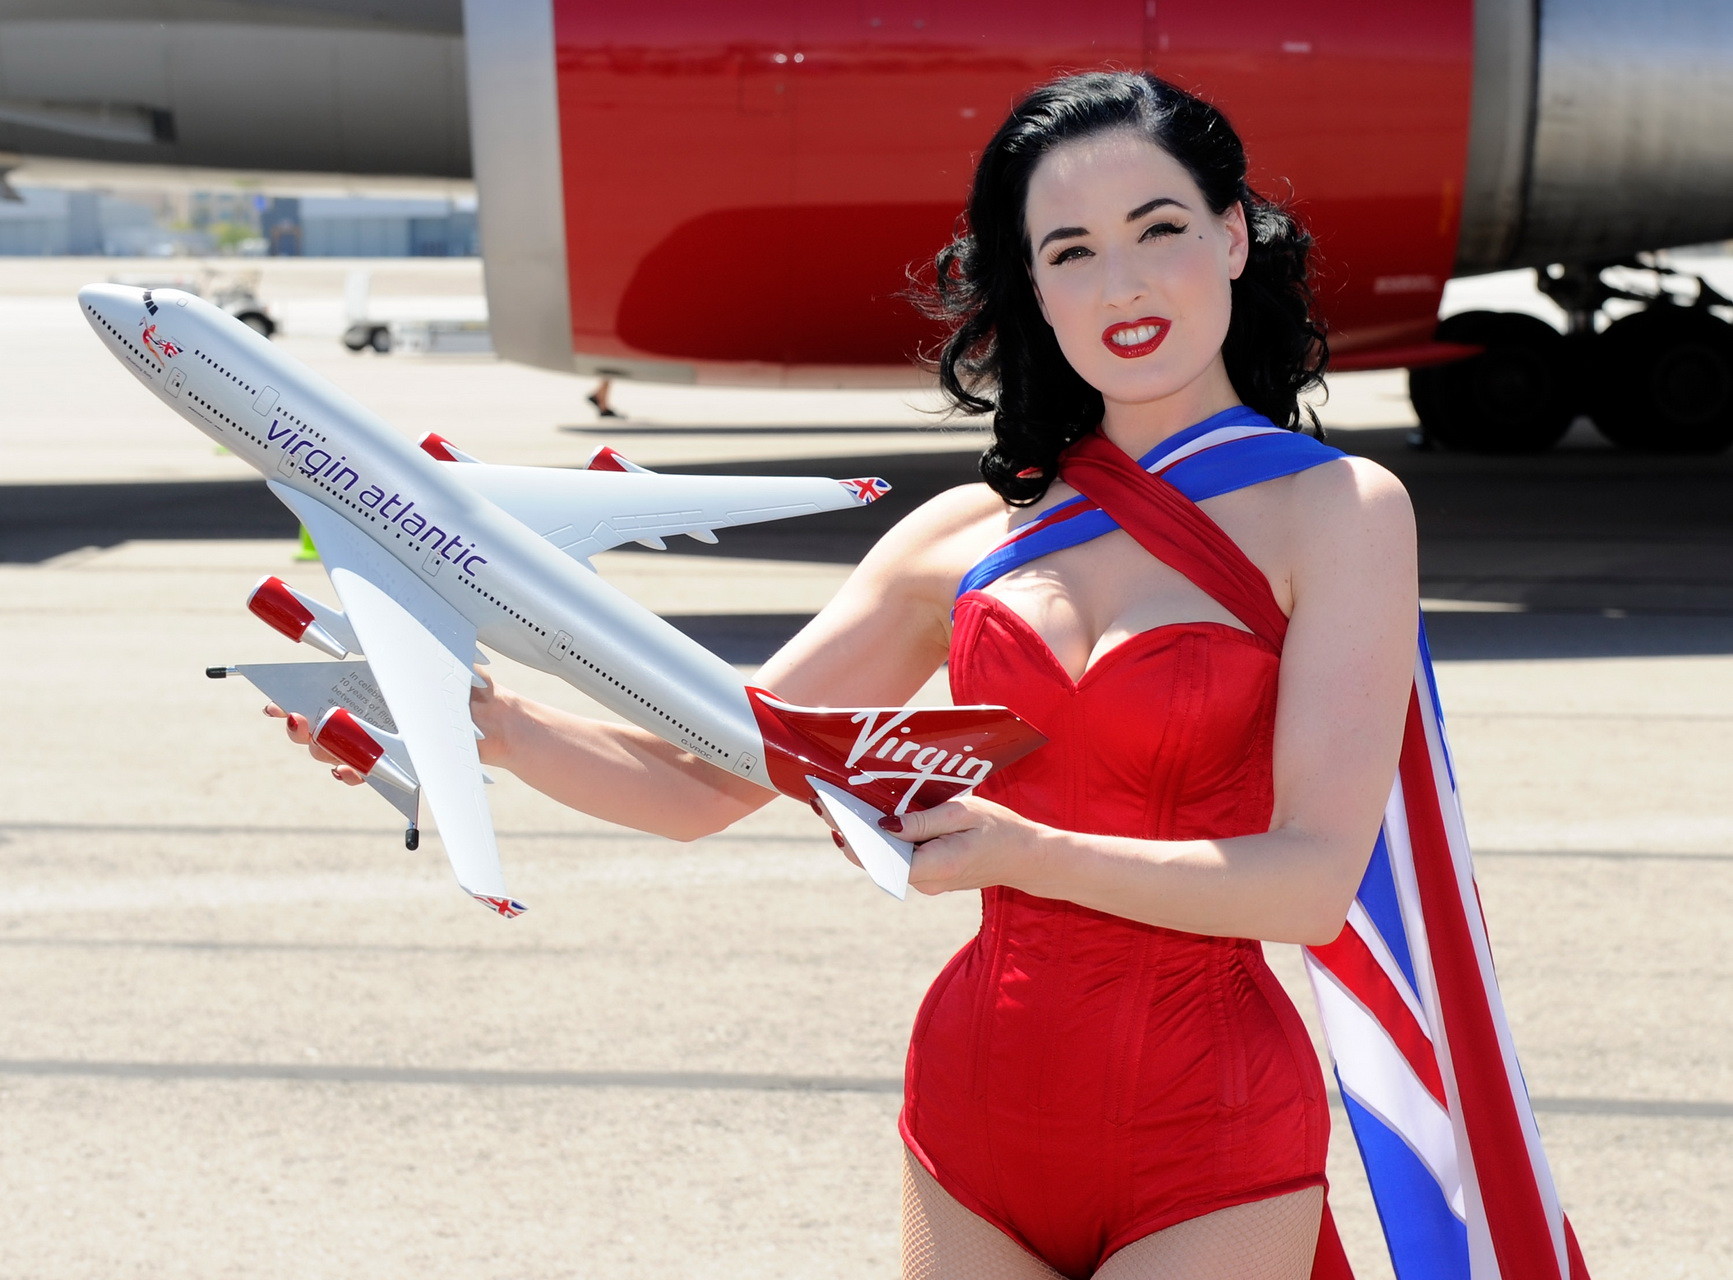 Dita Von Teese wearing red corset  fishnets at Virgin Atlantic's celebration #75344879